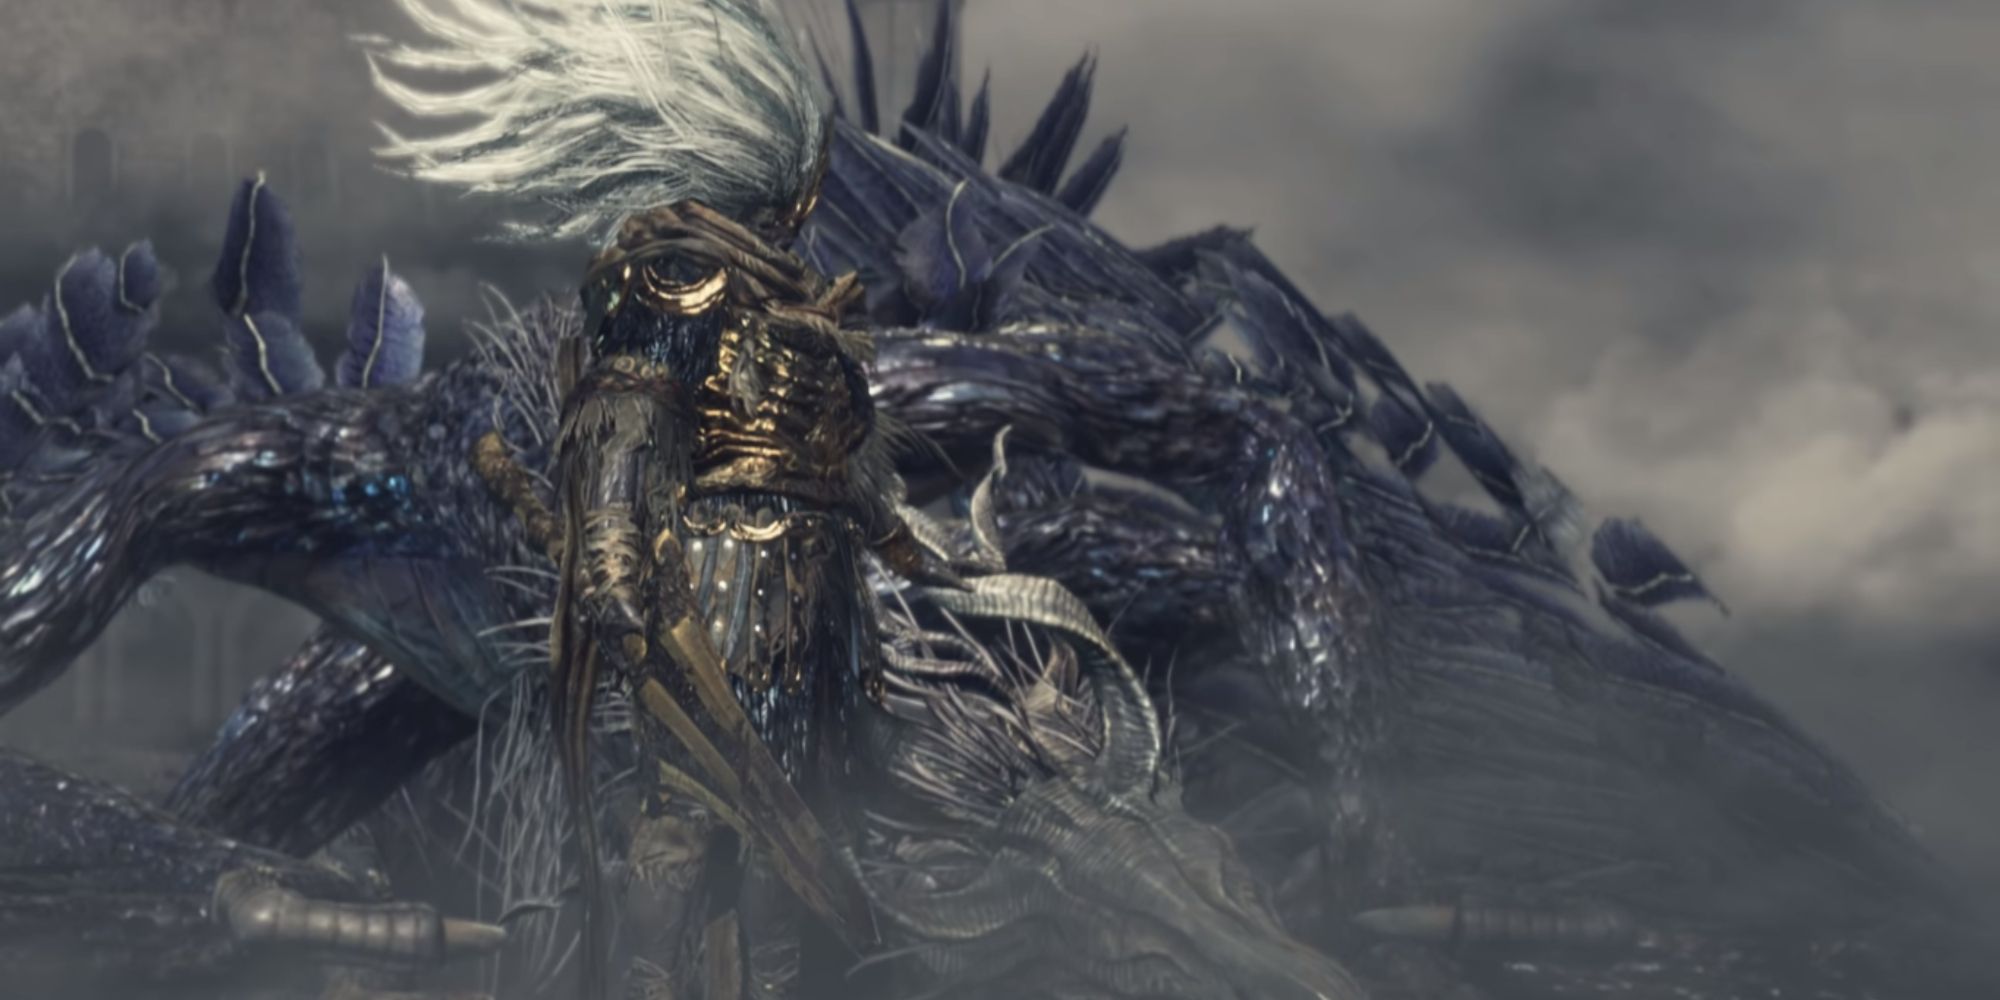 Nameless King standing near his dead dragon.